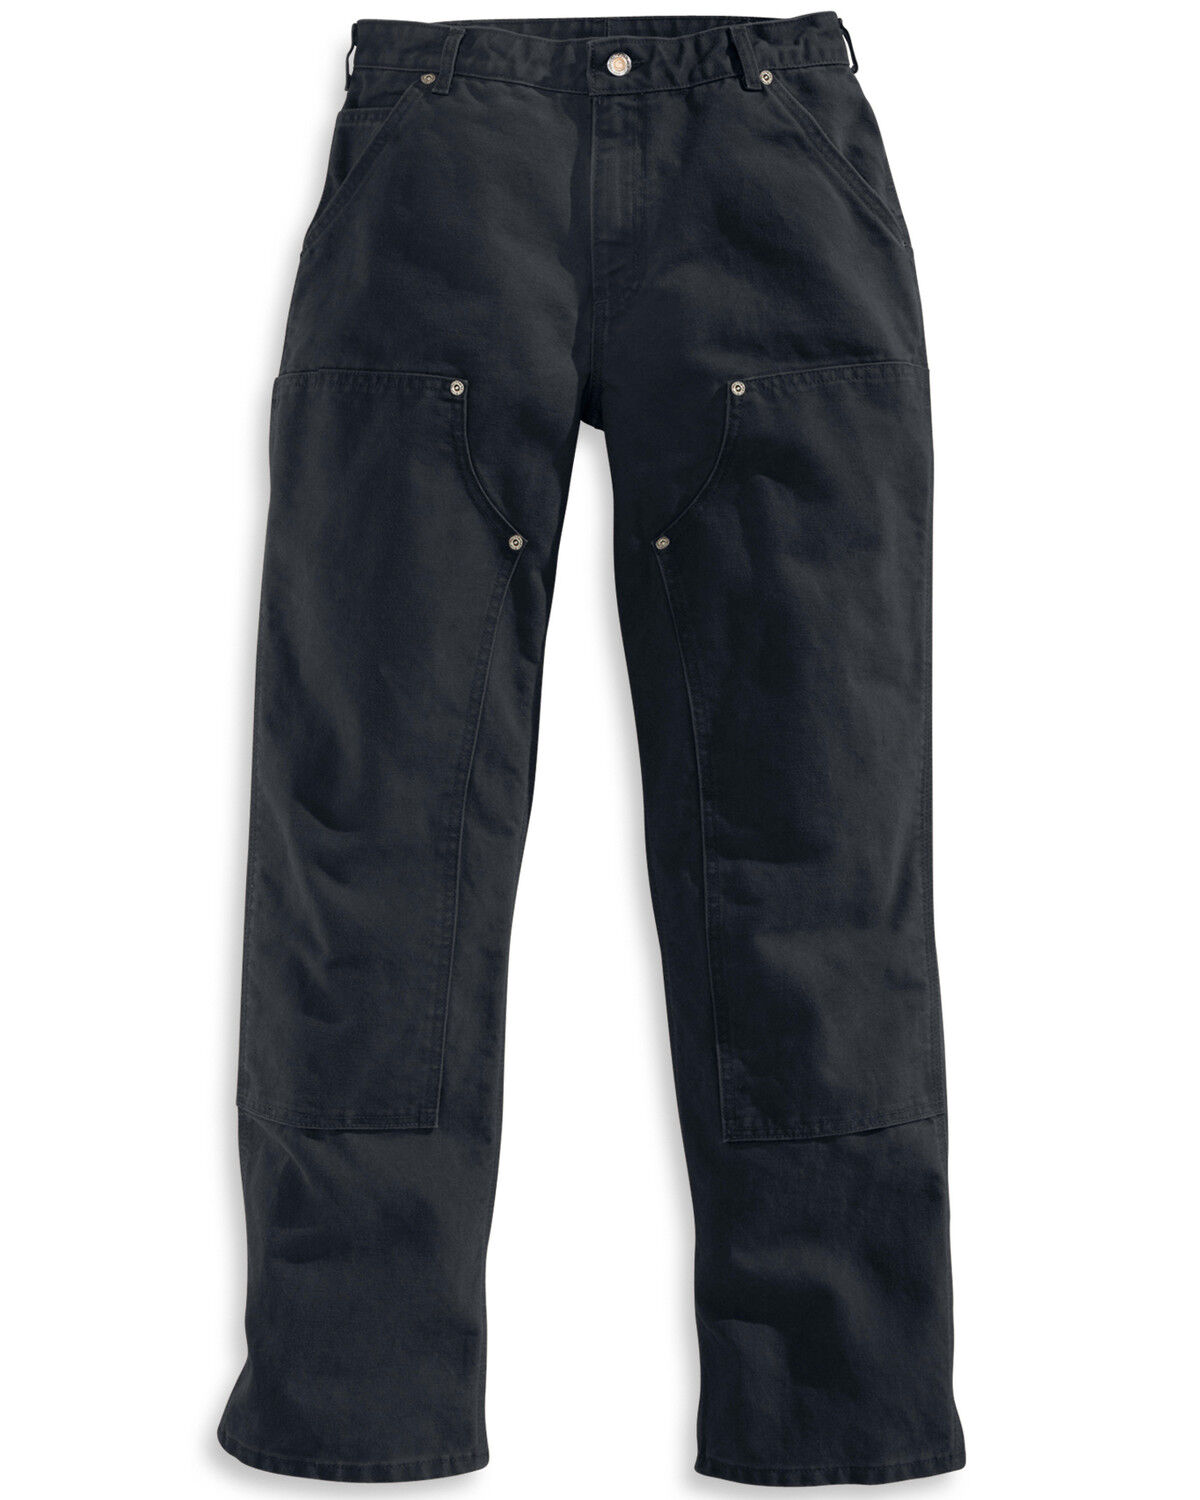 carhartt black jeans